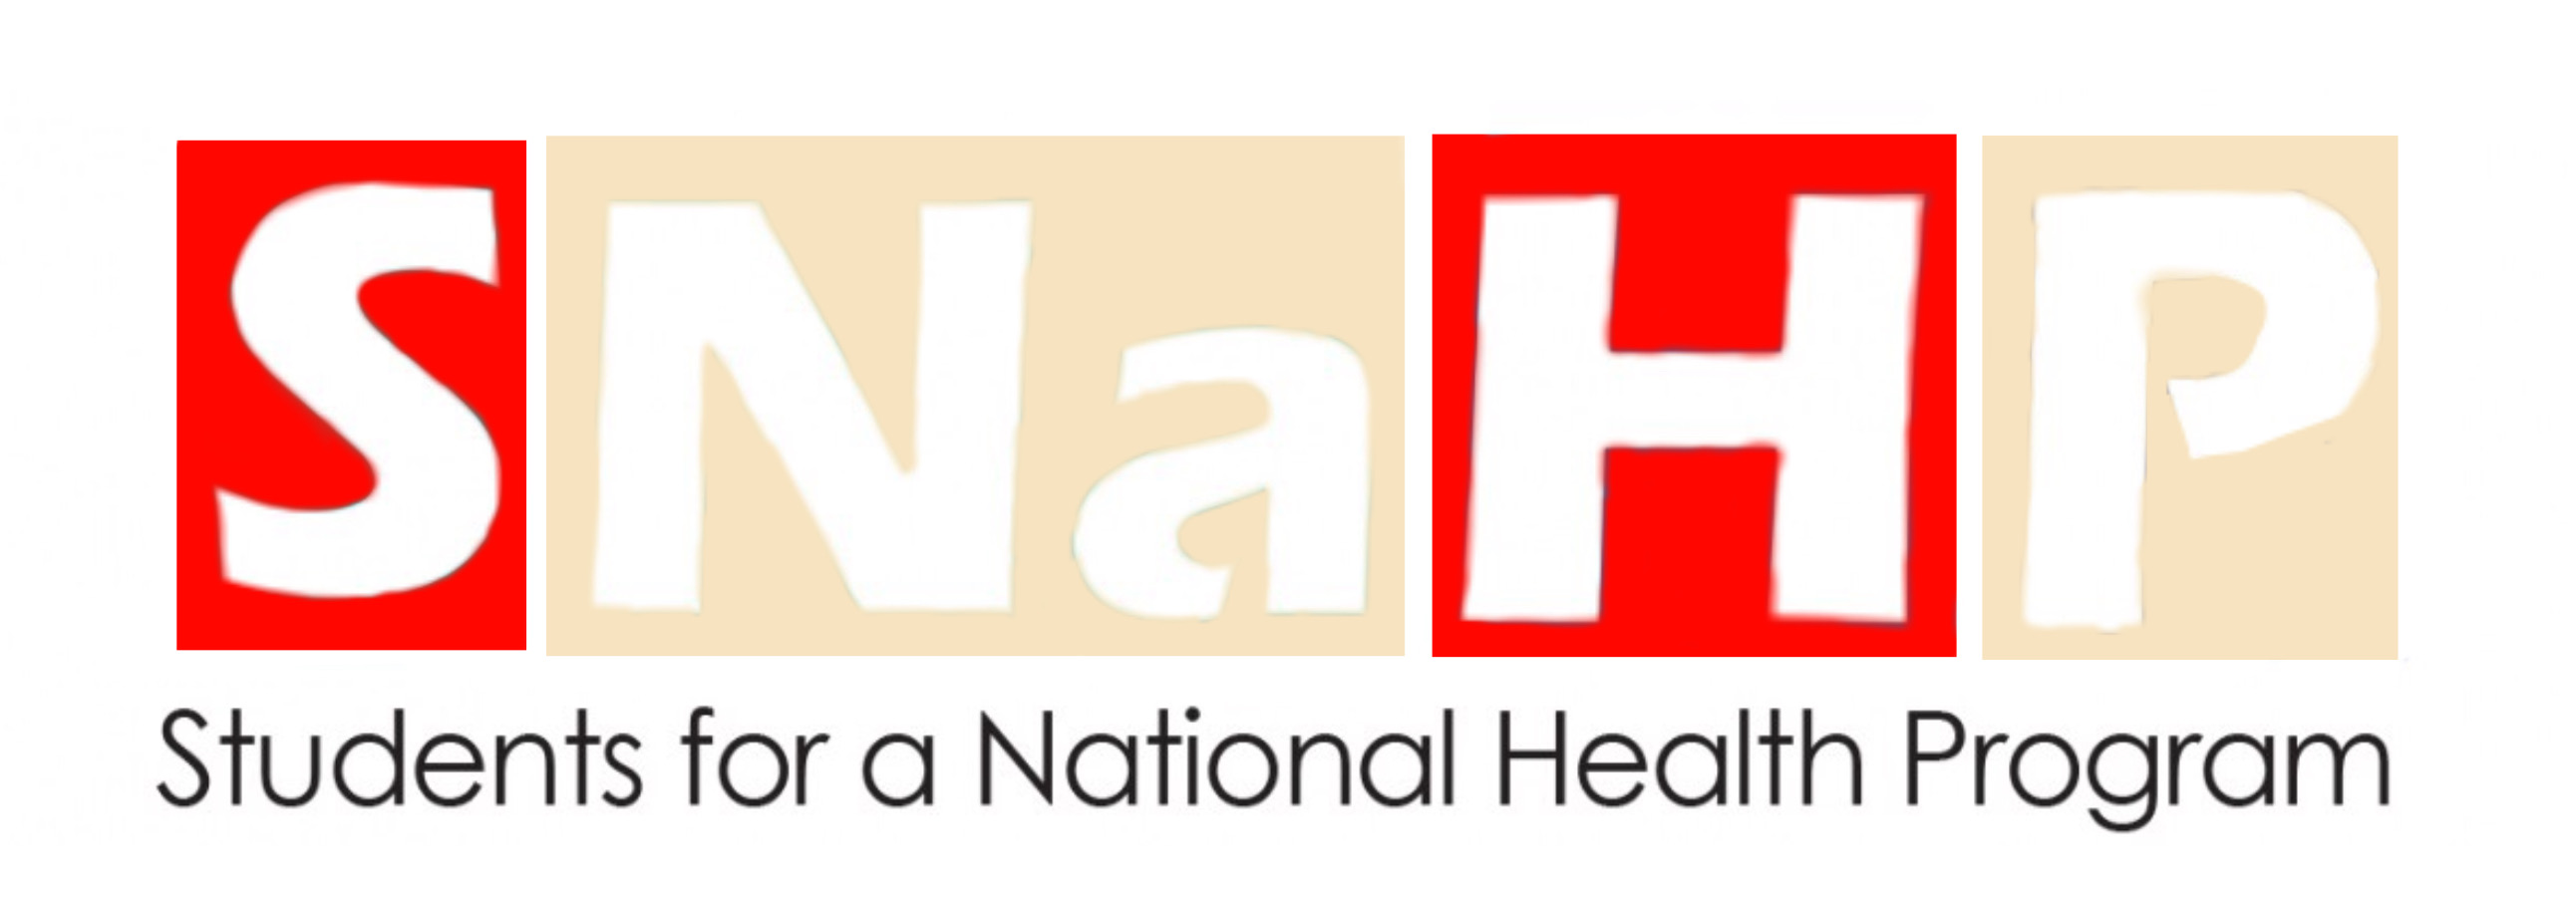 Students for a National Health Program - Oklahoma